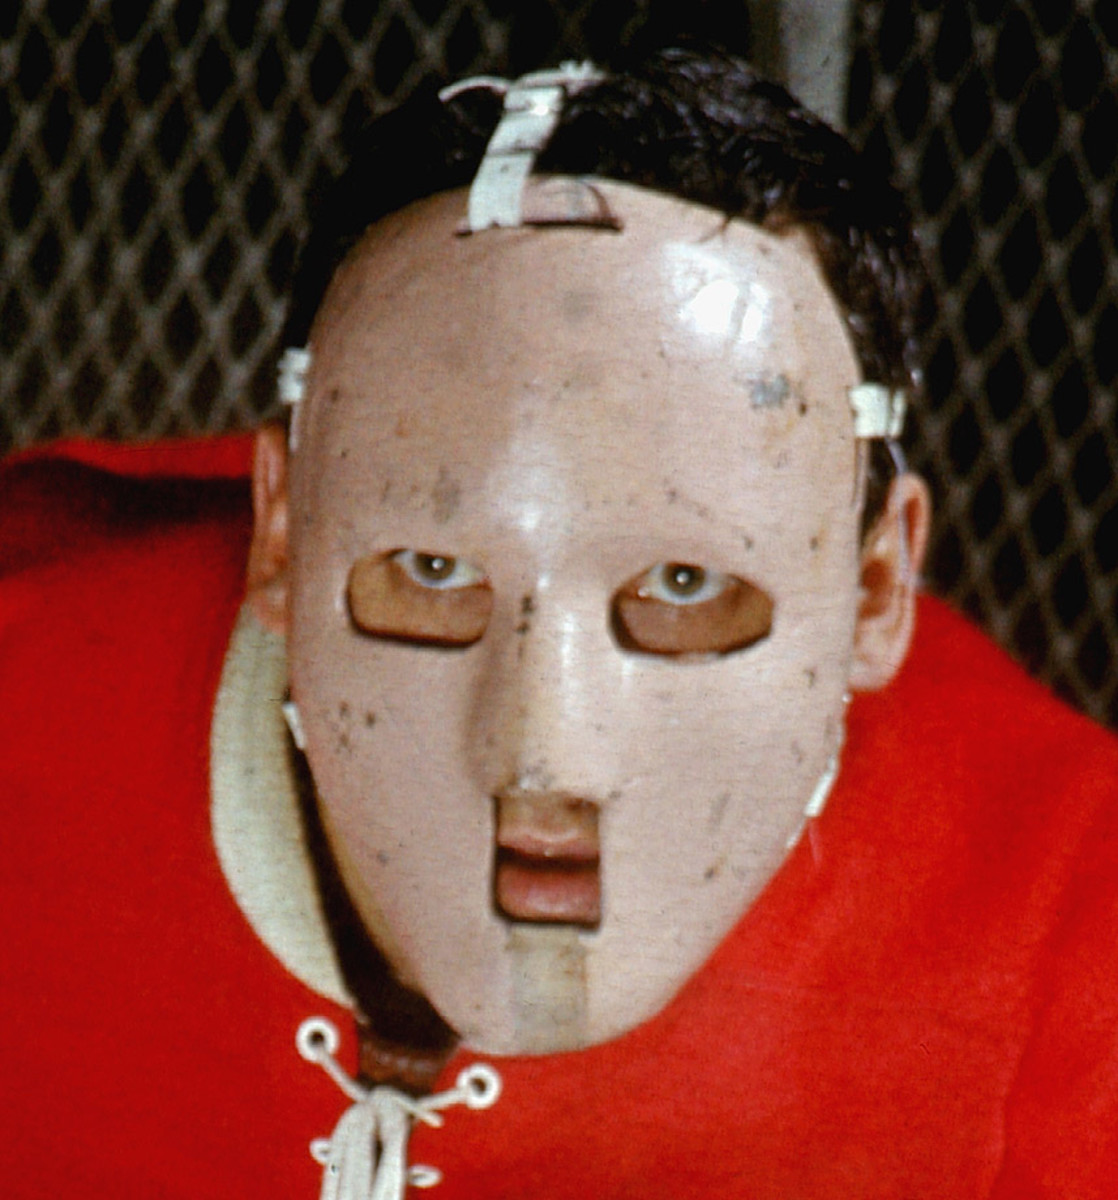 1959-Jacque-Plante-goalie-mask.jpg